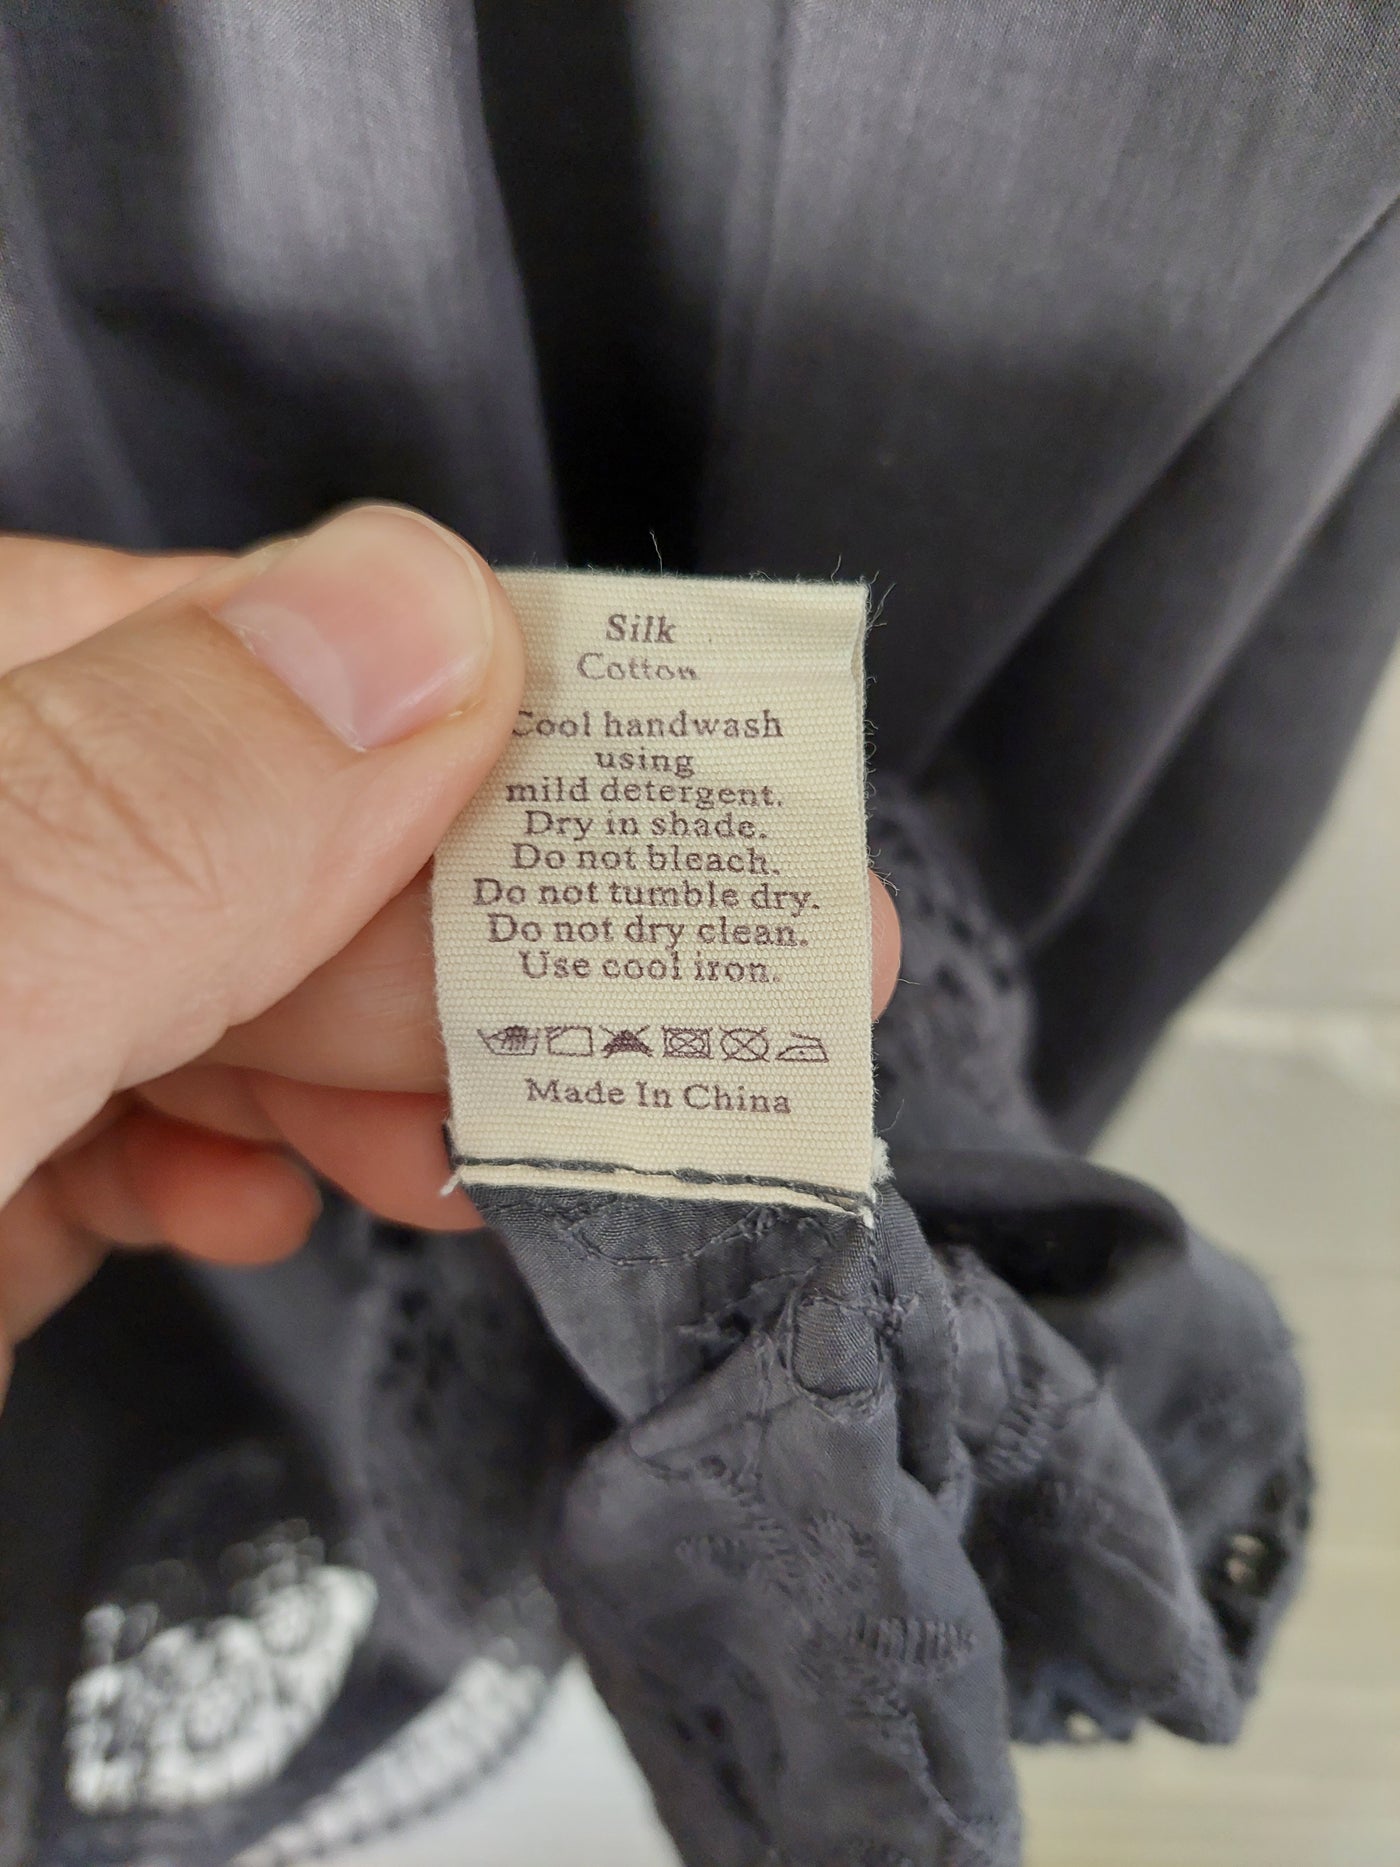 Lee Mathews Grey Silk / Cotton Slip Dress, Size 2 (10)